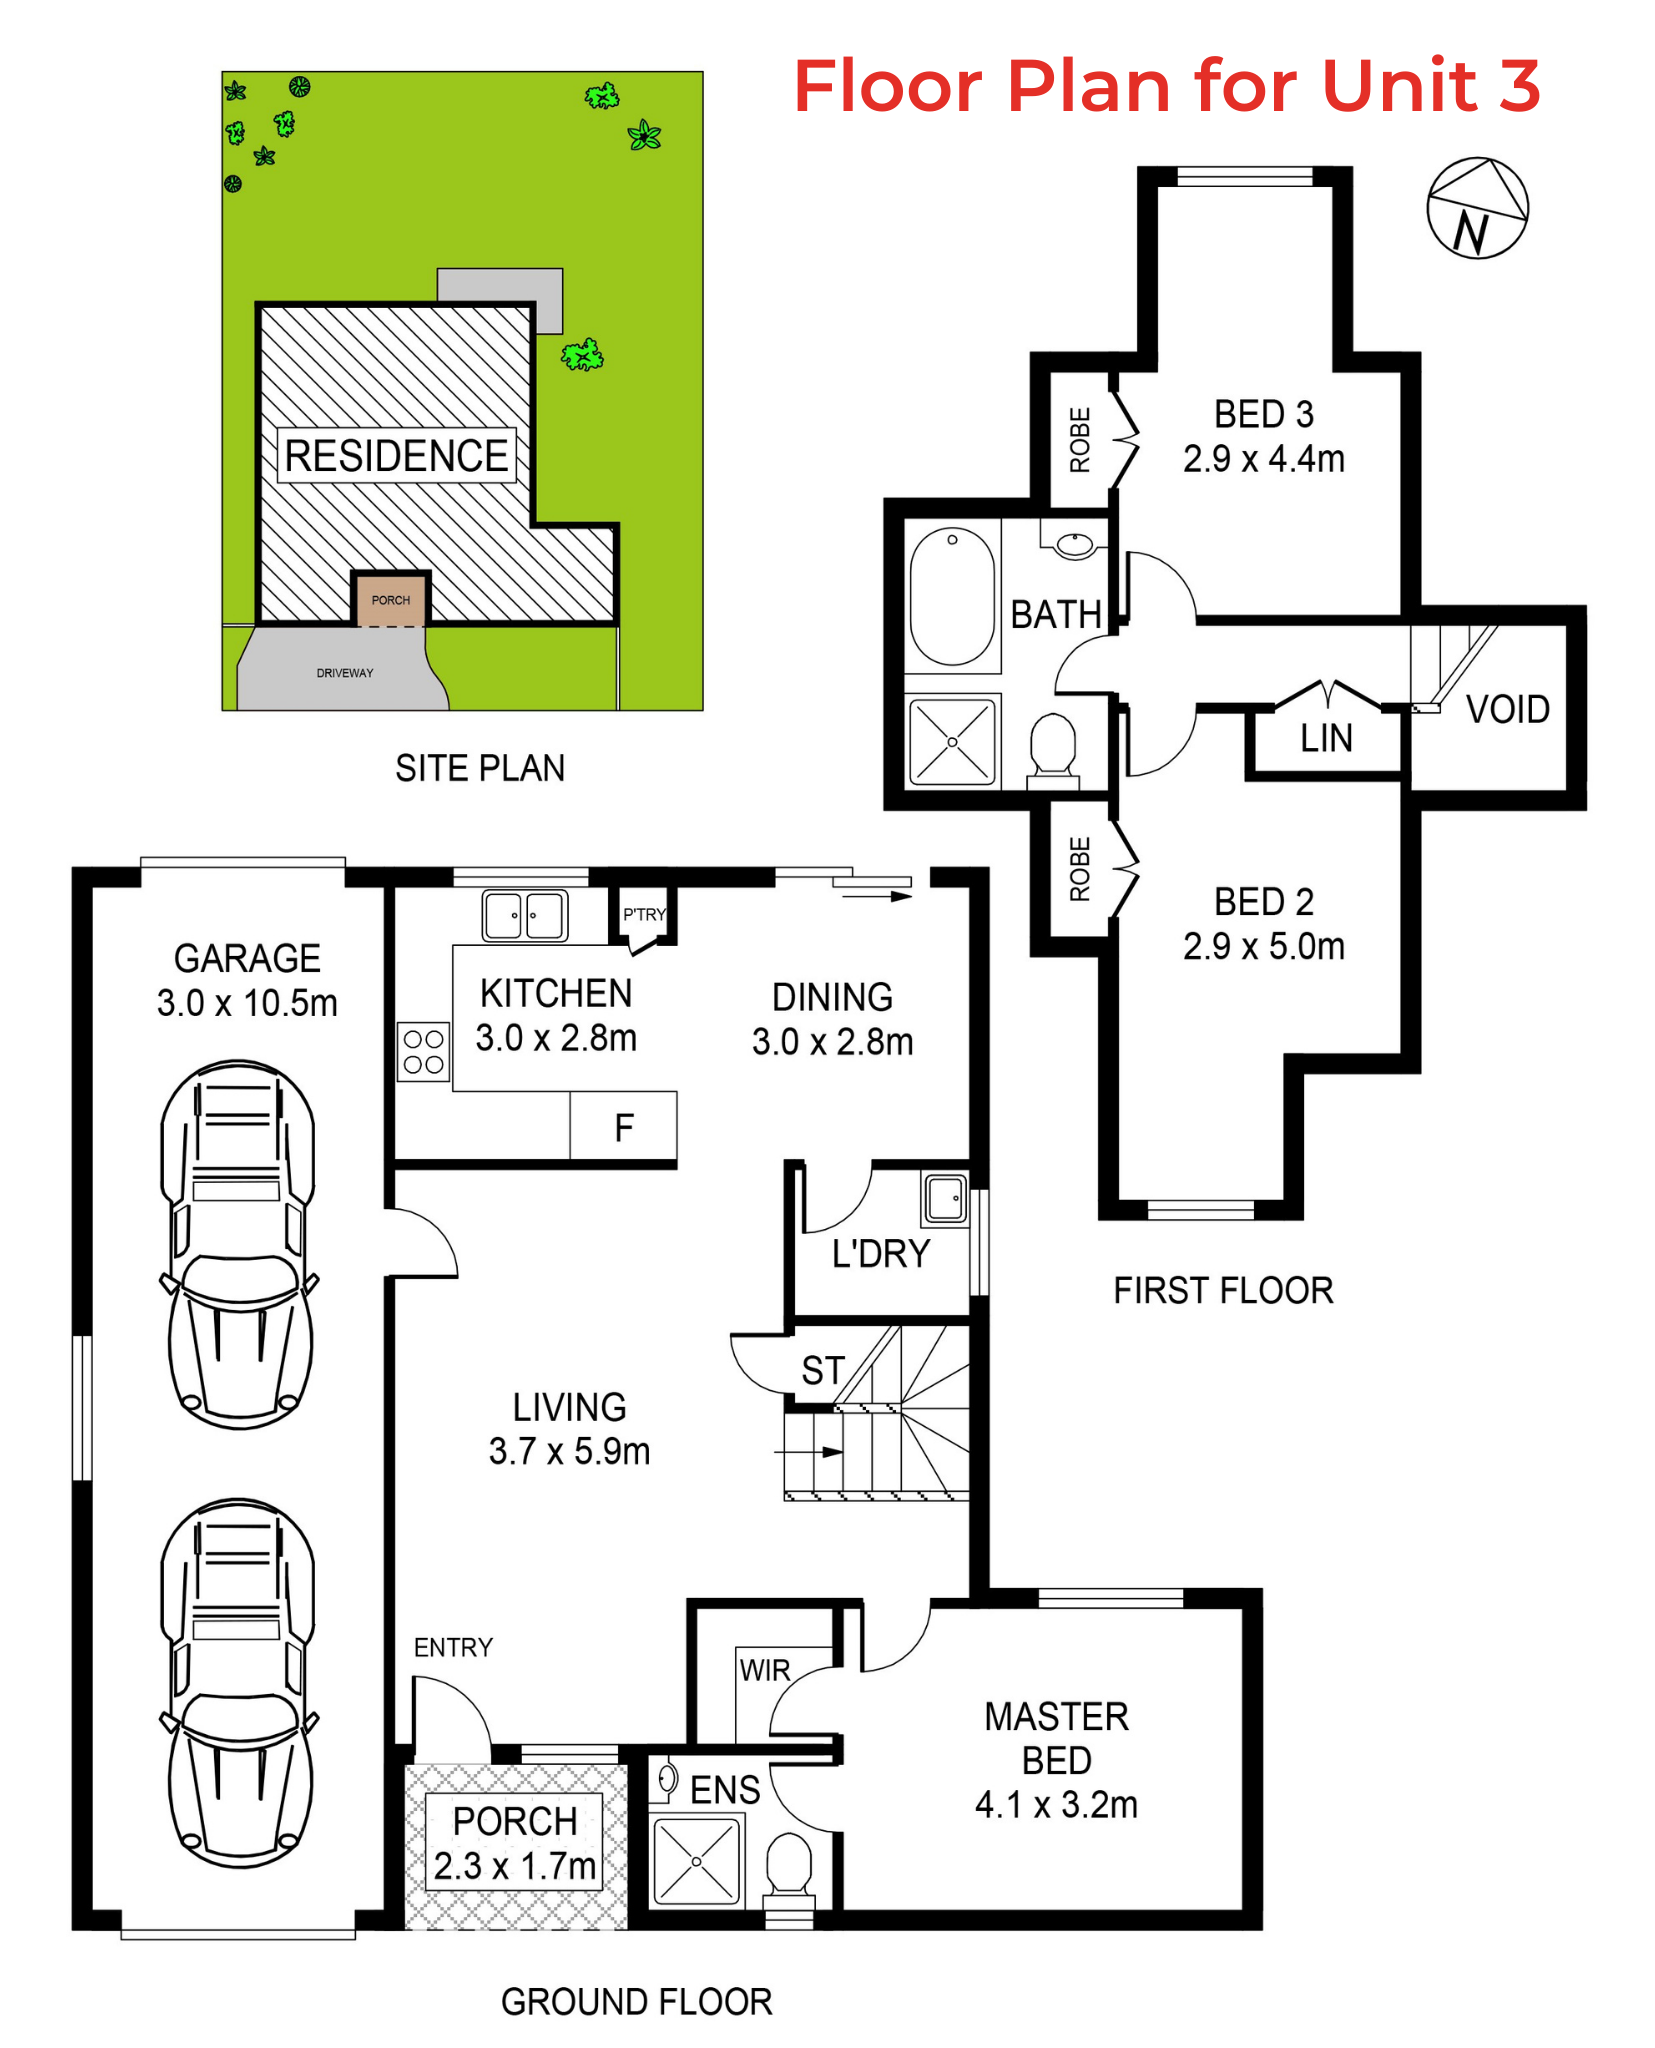 Floor Plan for Unit 3